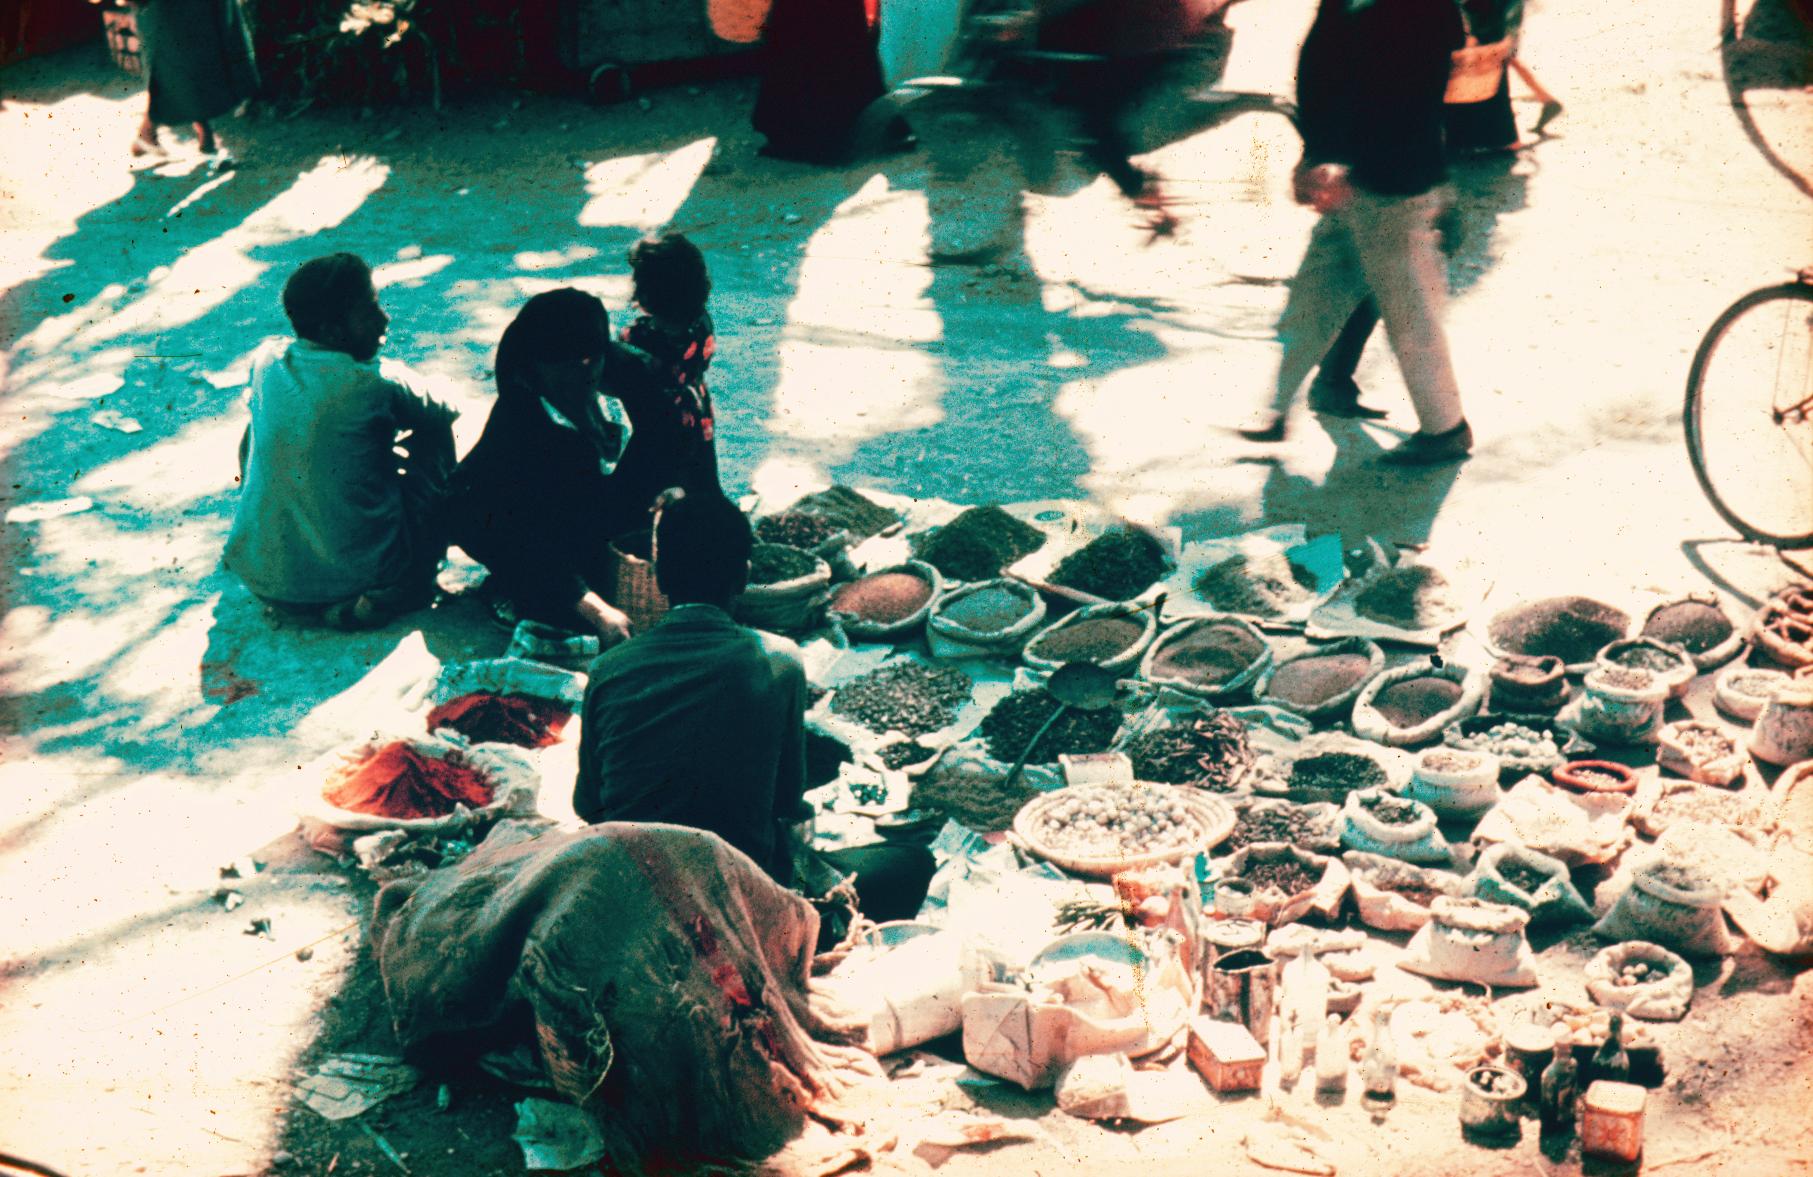 Merchant in Marrakech Market